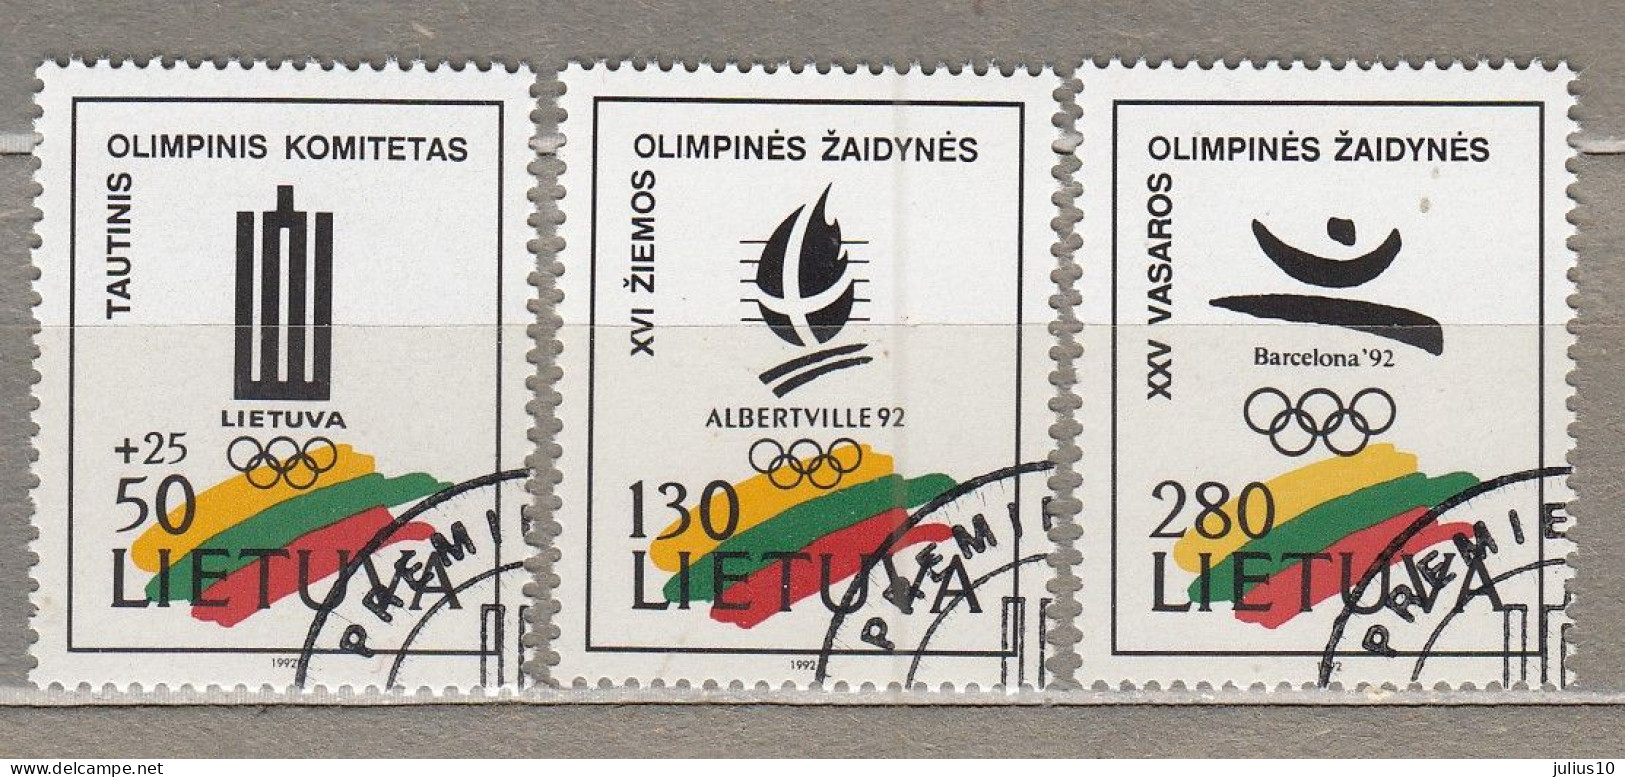 LITHUANIA 1992 Olympic Games MI 496-498 Used(o) #Lt812 - Lithuania